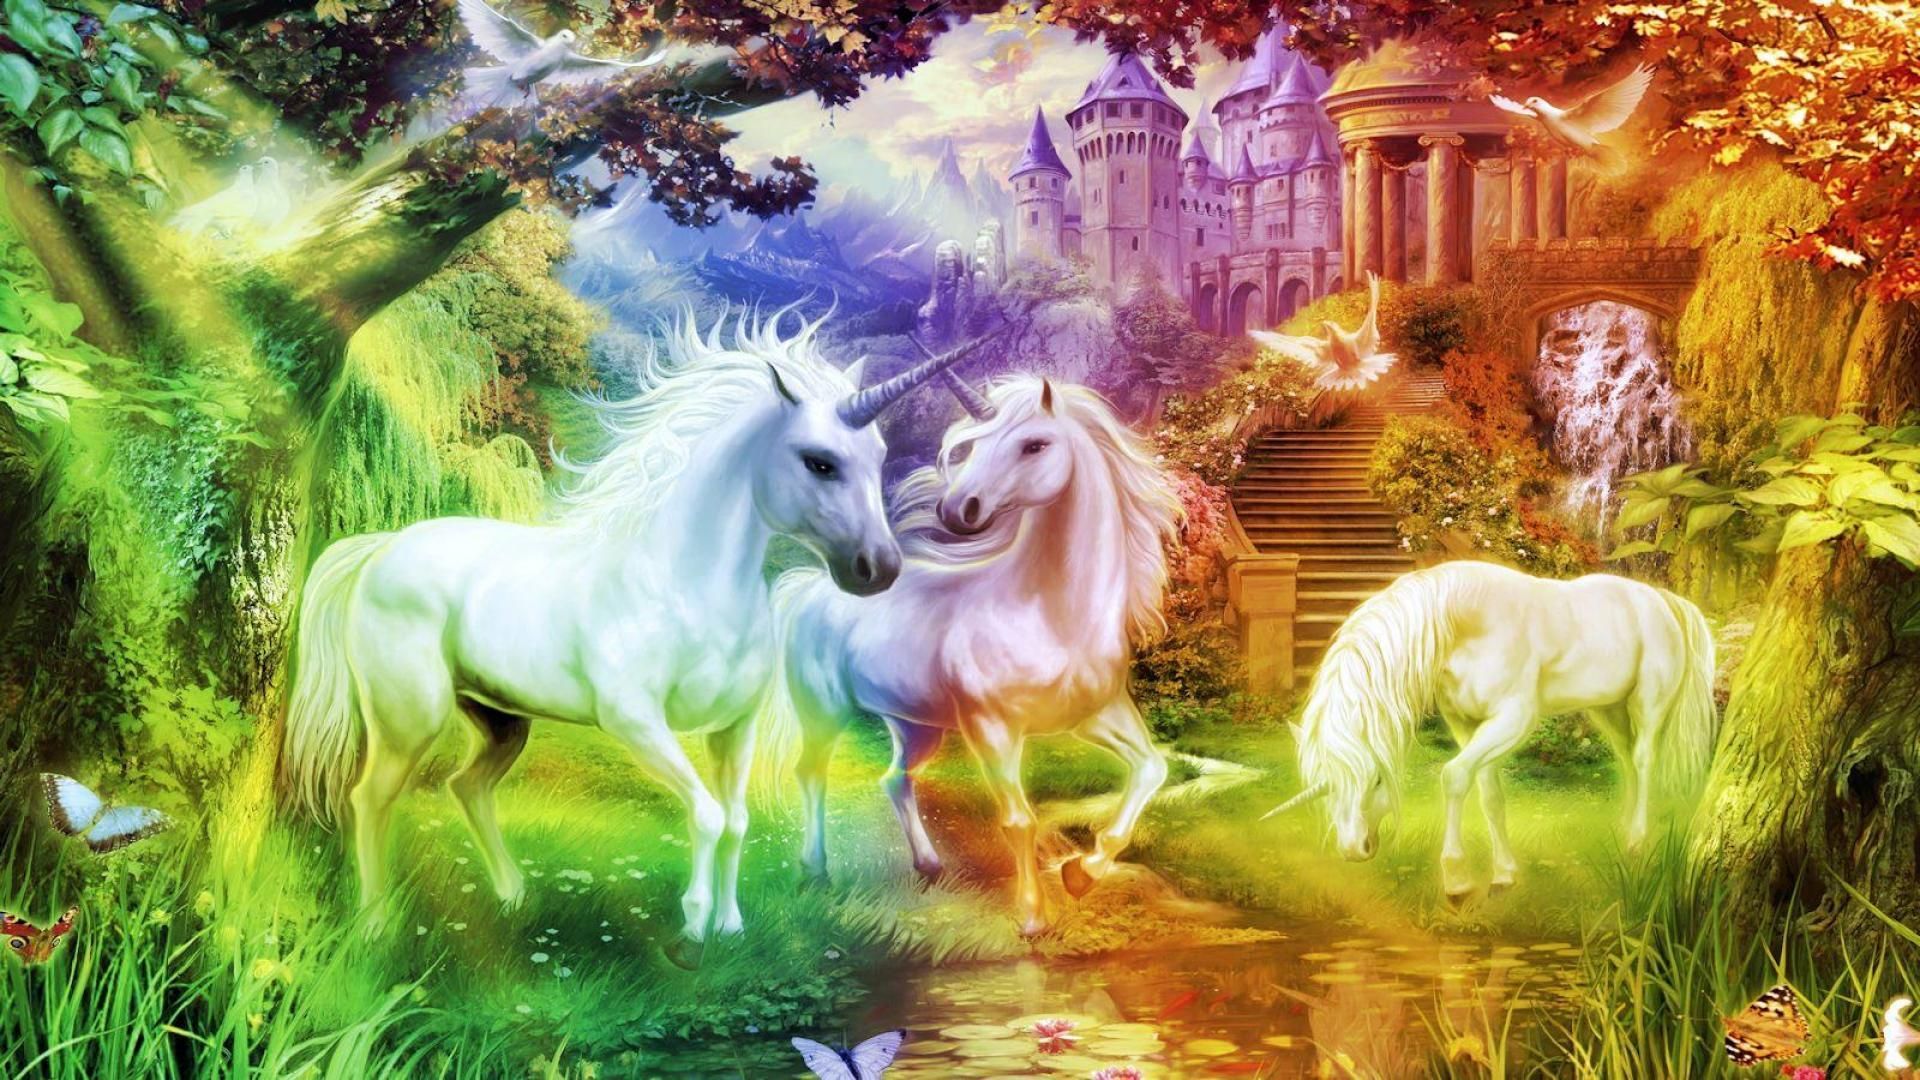 Wallpaper Unicorn Horse Resolution Rainbow Fantasy .4 1920x1080. Unicorn wallpaper, Unicorn fantasy, Fantasy horses